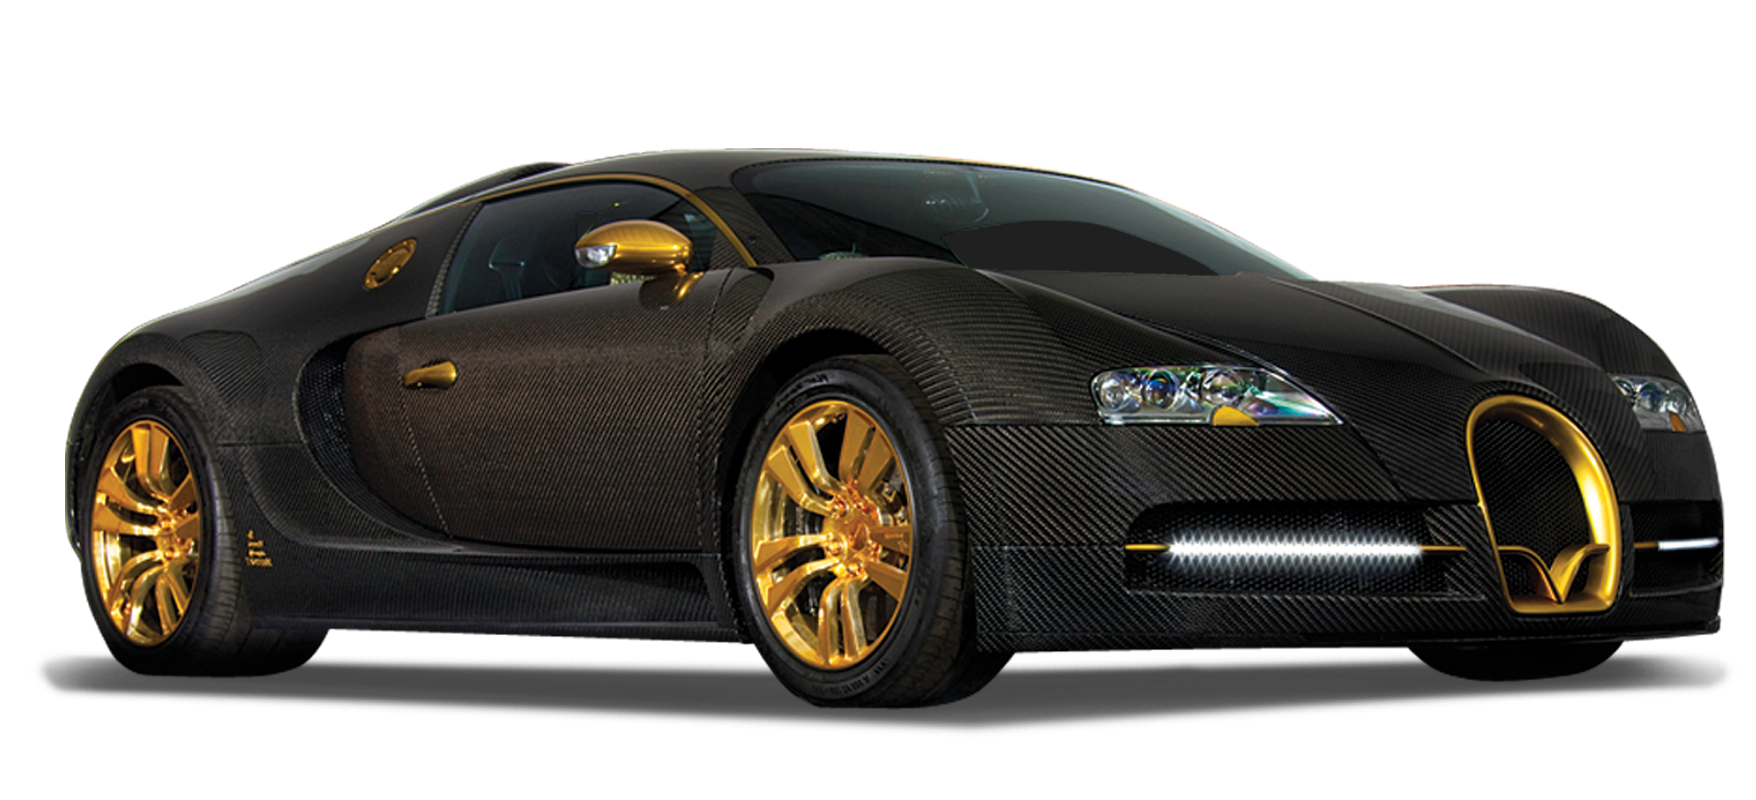 Free Bugatti Transparent, Download Free Bugatti Transparent png images ...